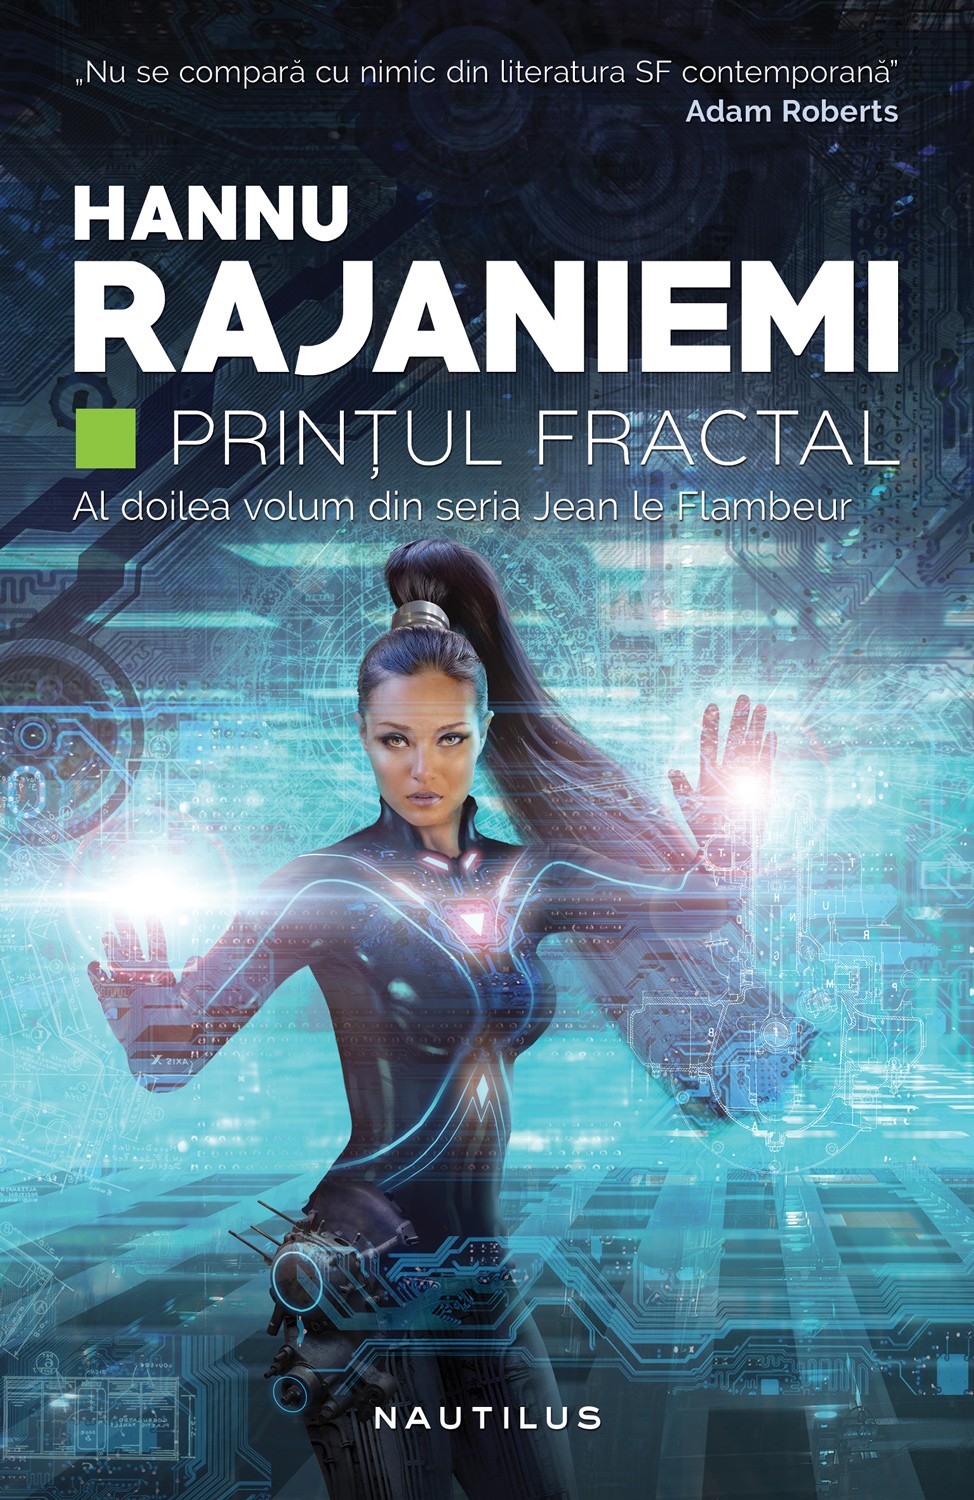 Prințul fractal de Hannu Rajaniemi